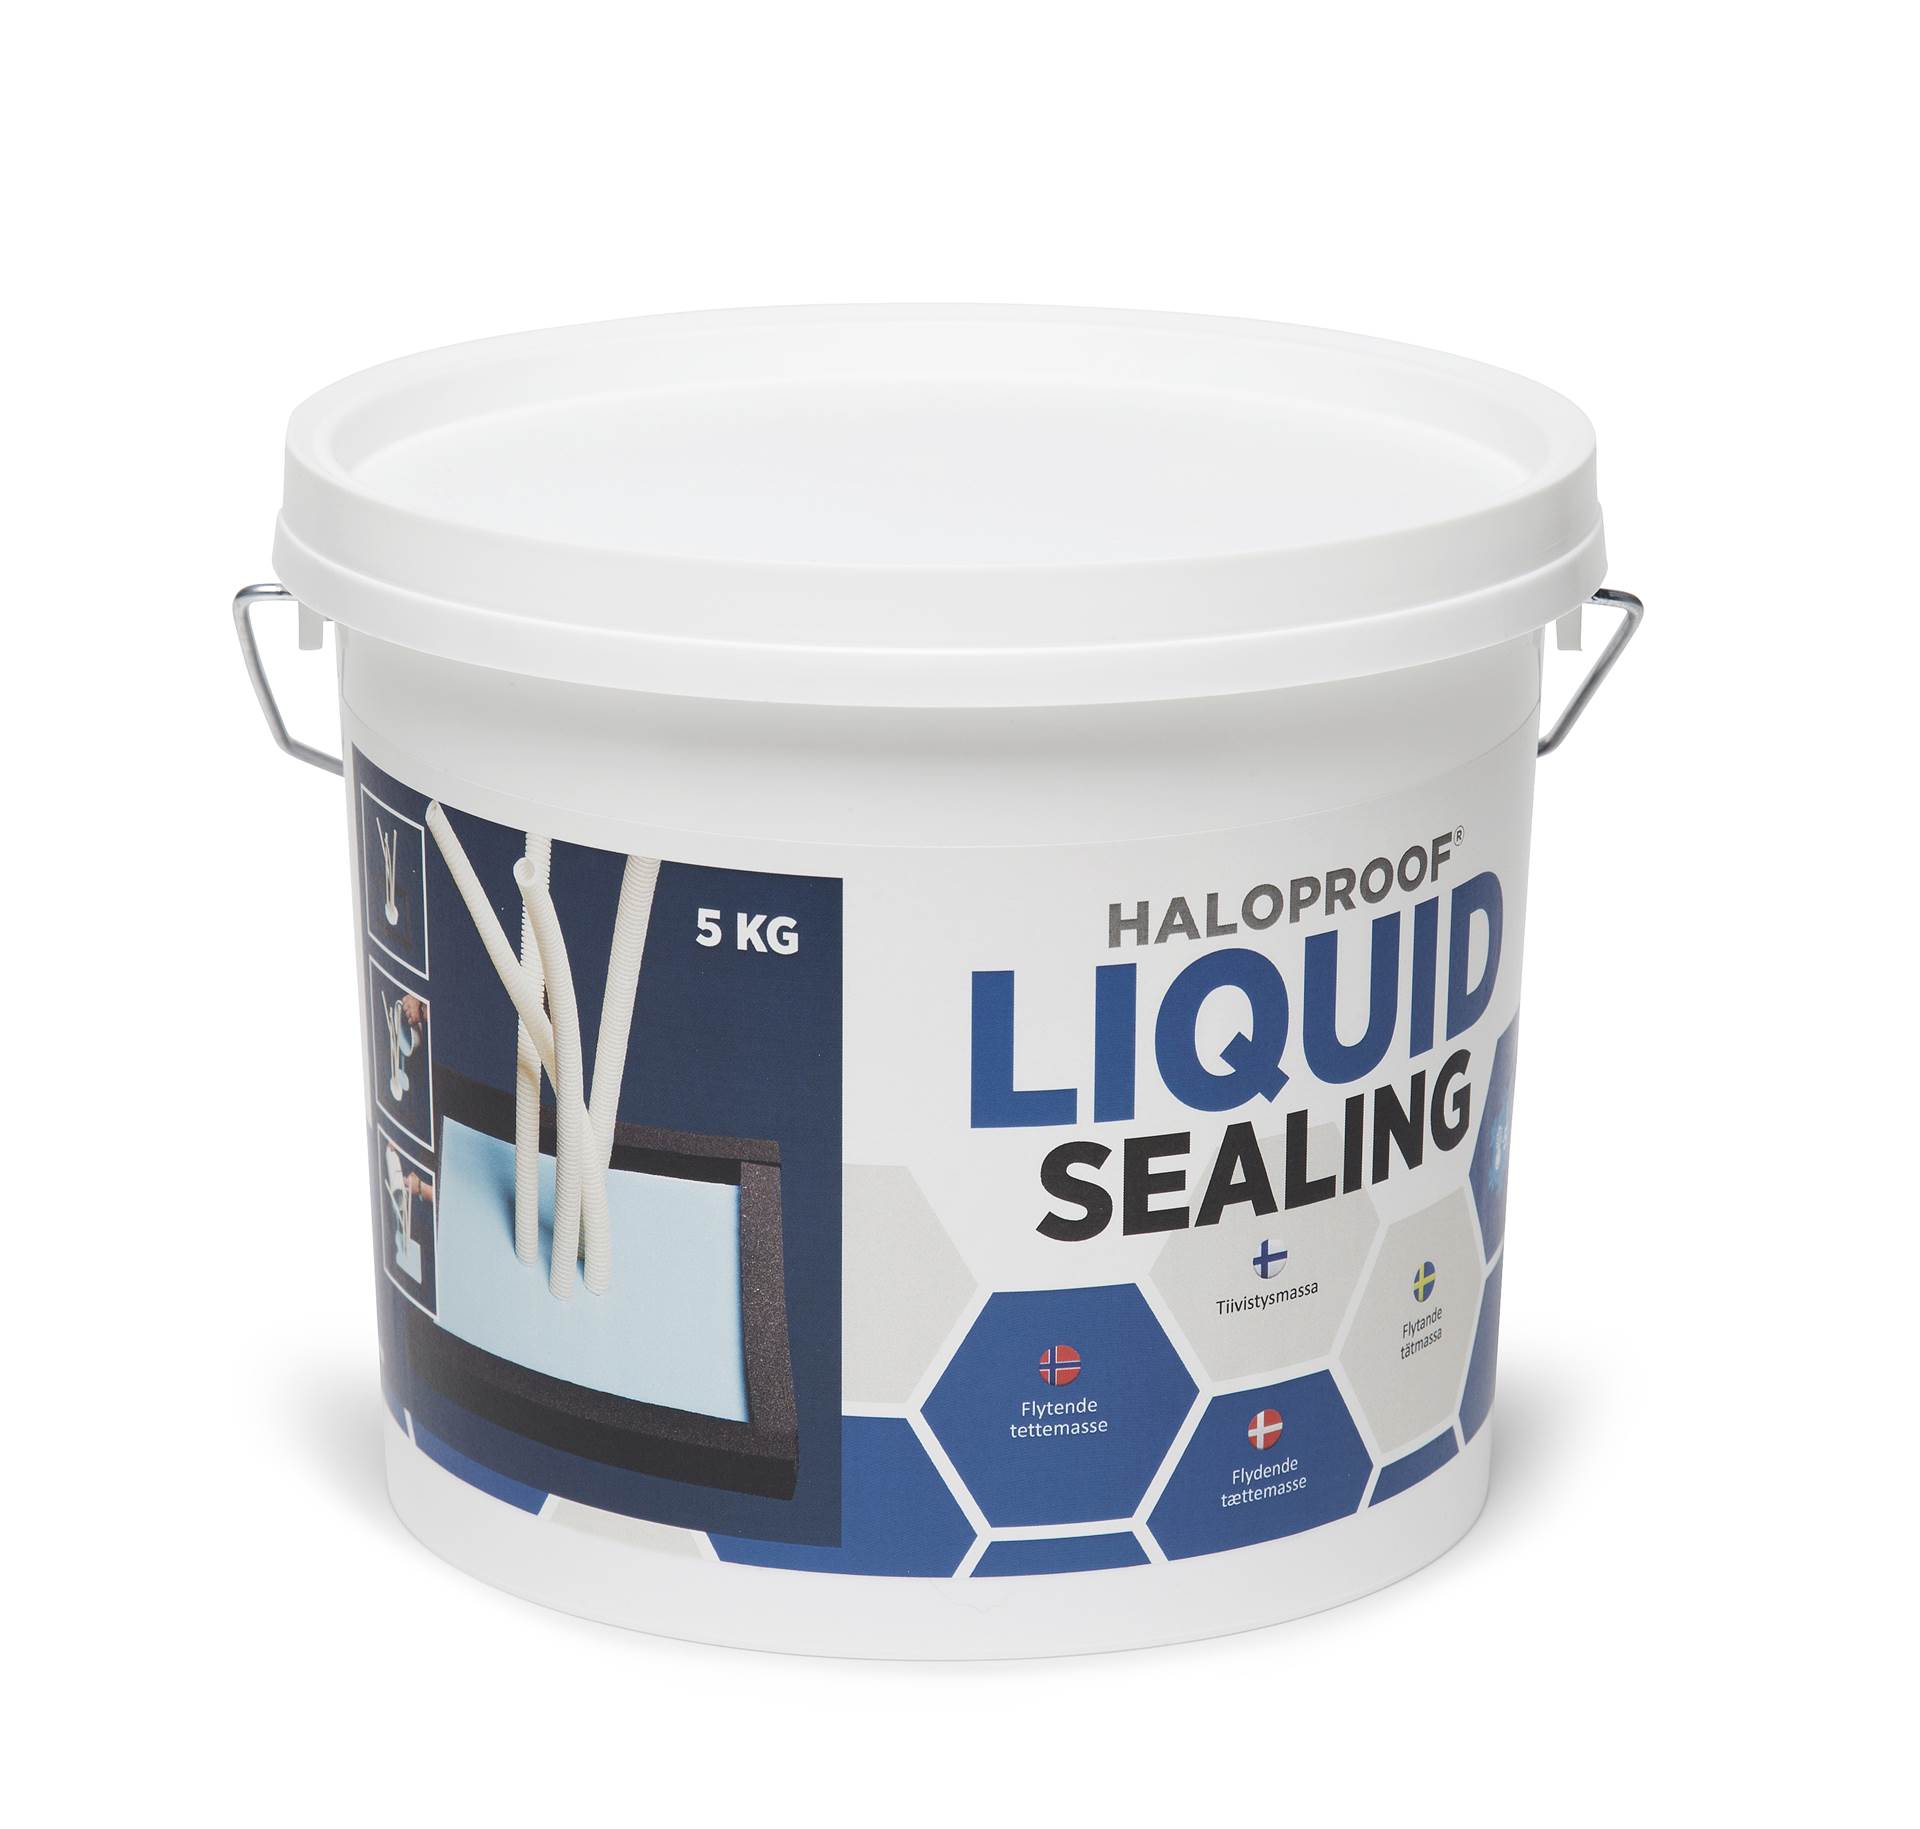 PB_haloproof liquid sealing 745032